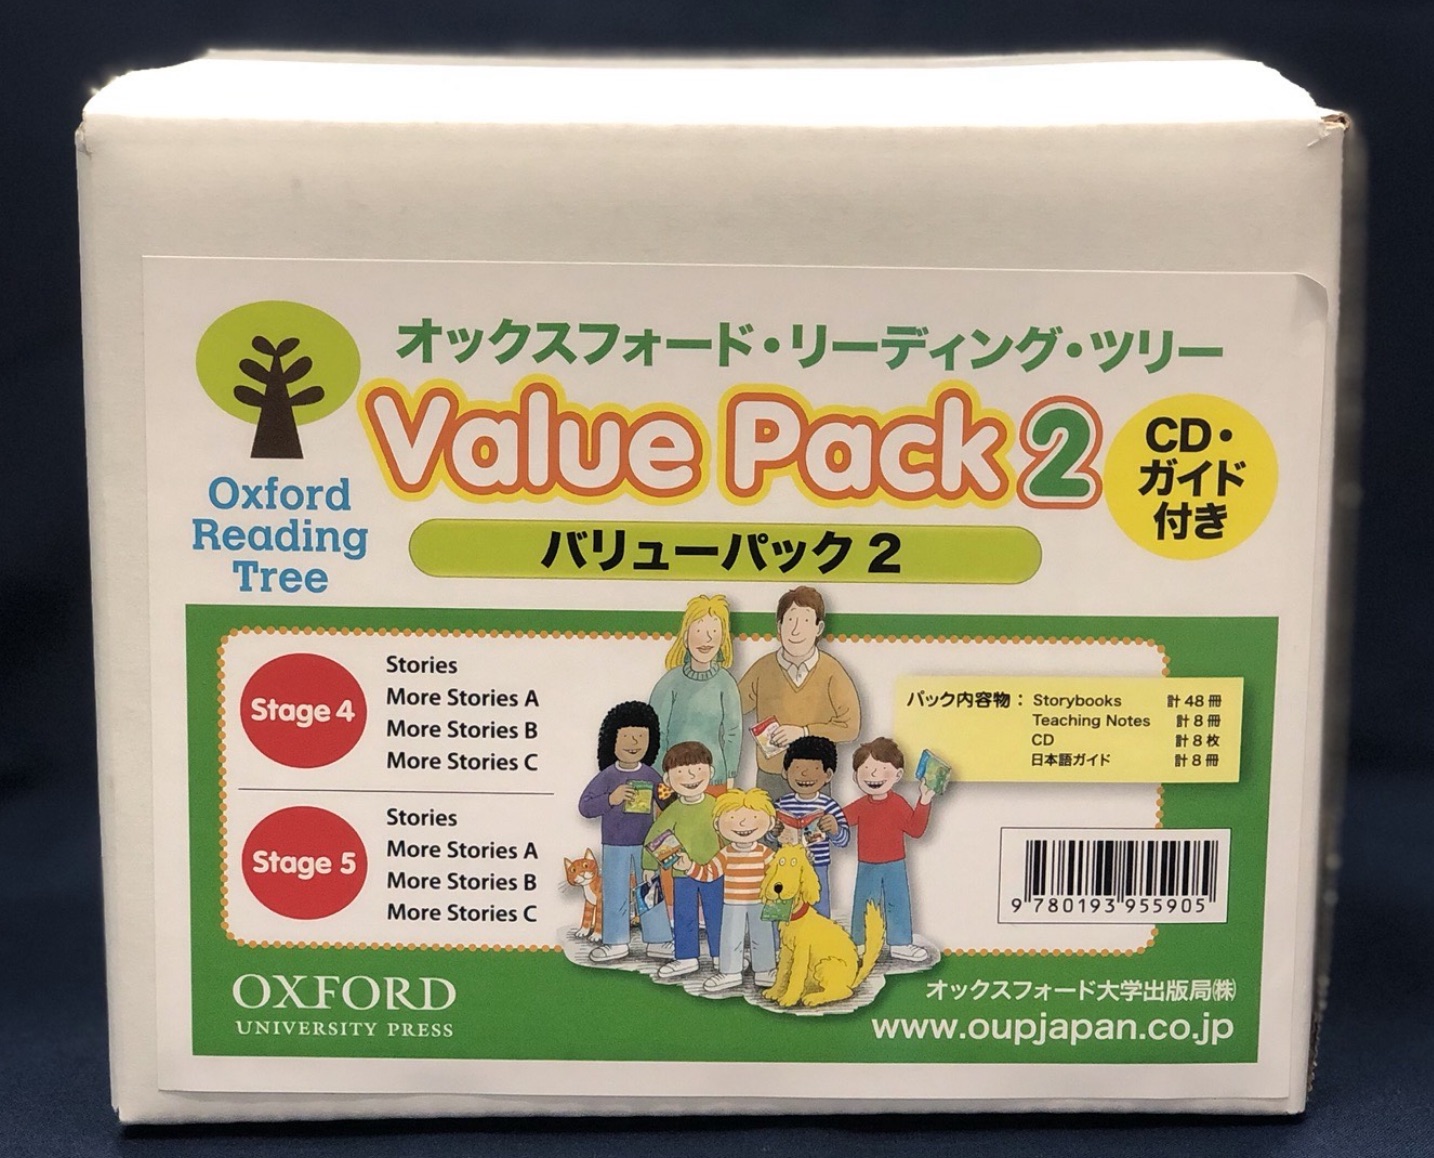 Oxford Reading Tree: Trunk Packs, Value Packs, Tadoku Pack